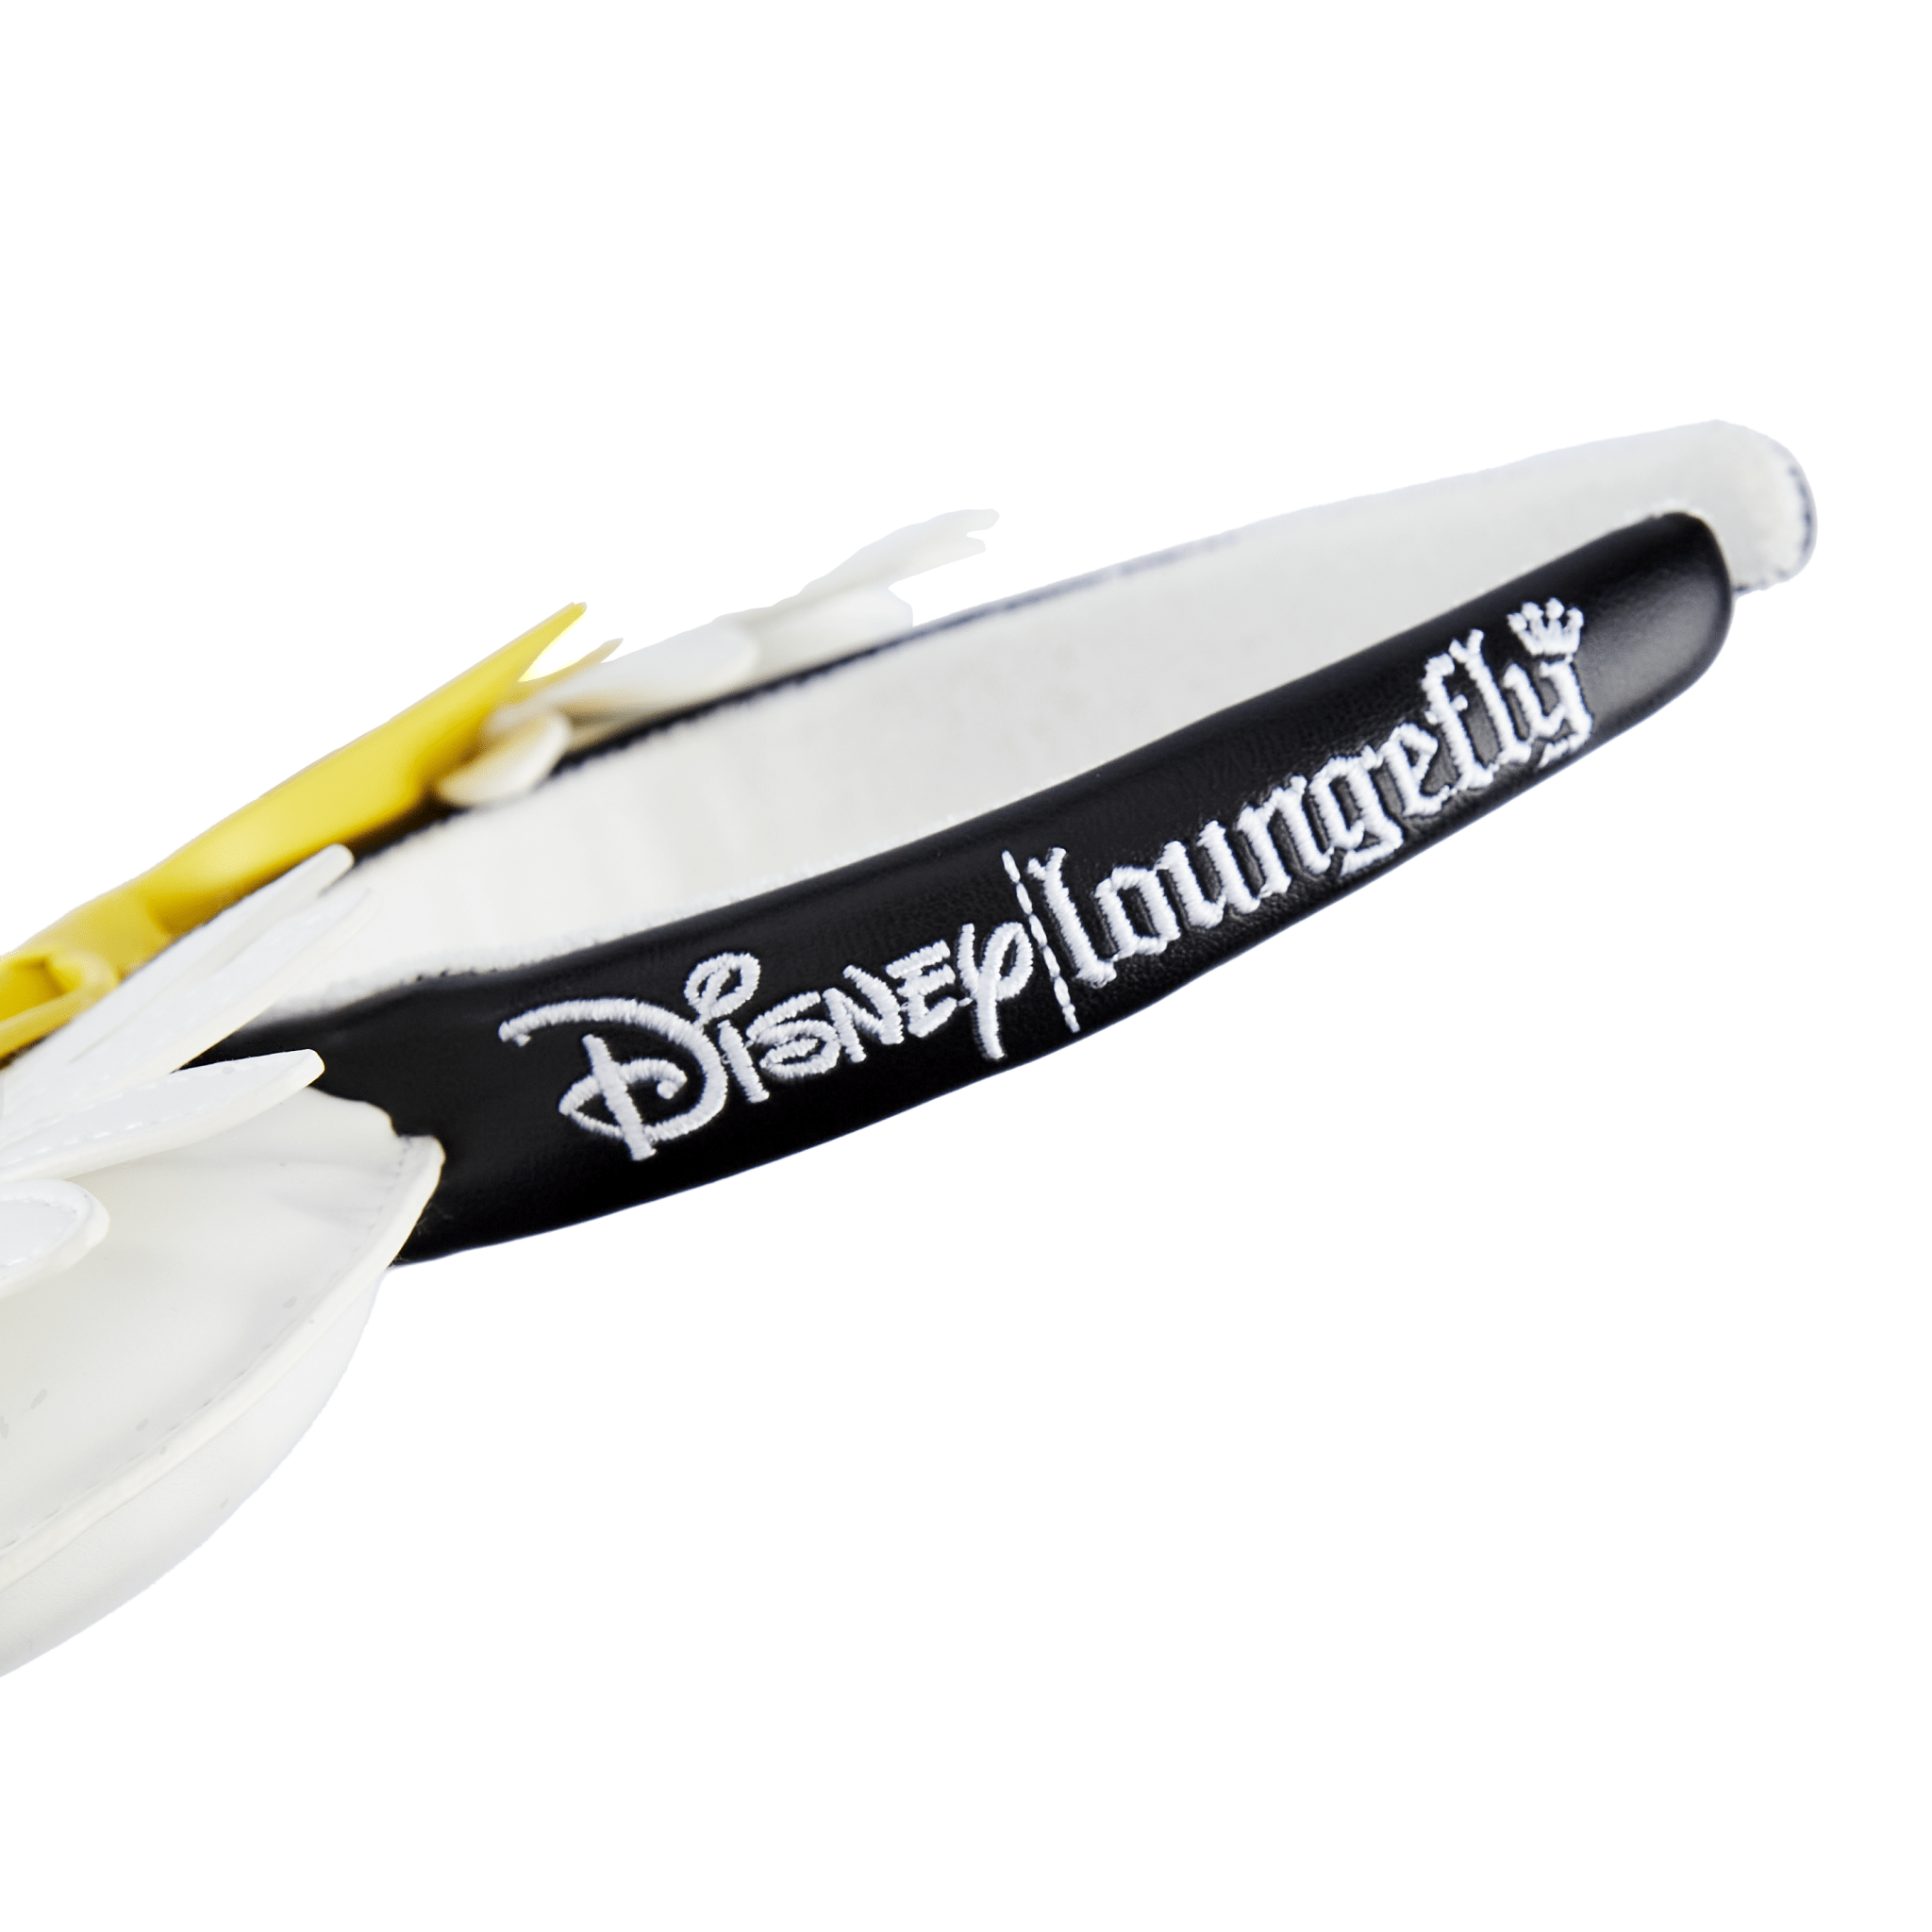 Loungefly x Disney Minnie Mouse Daisies Headband - GeekCore